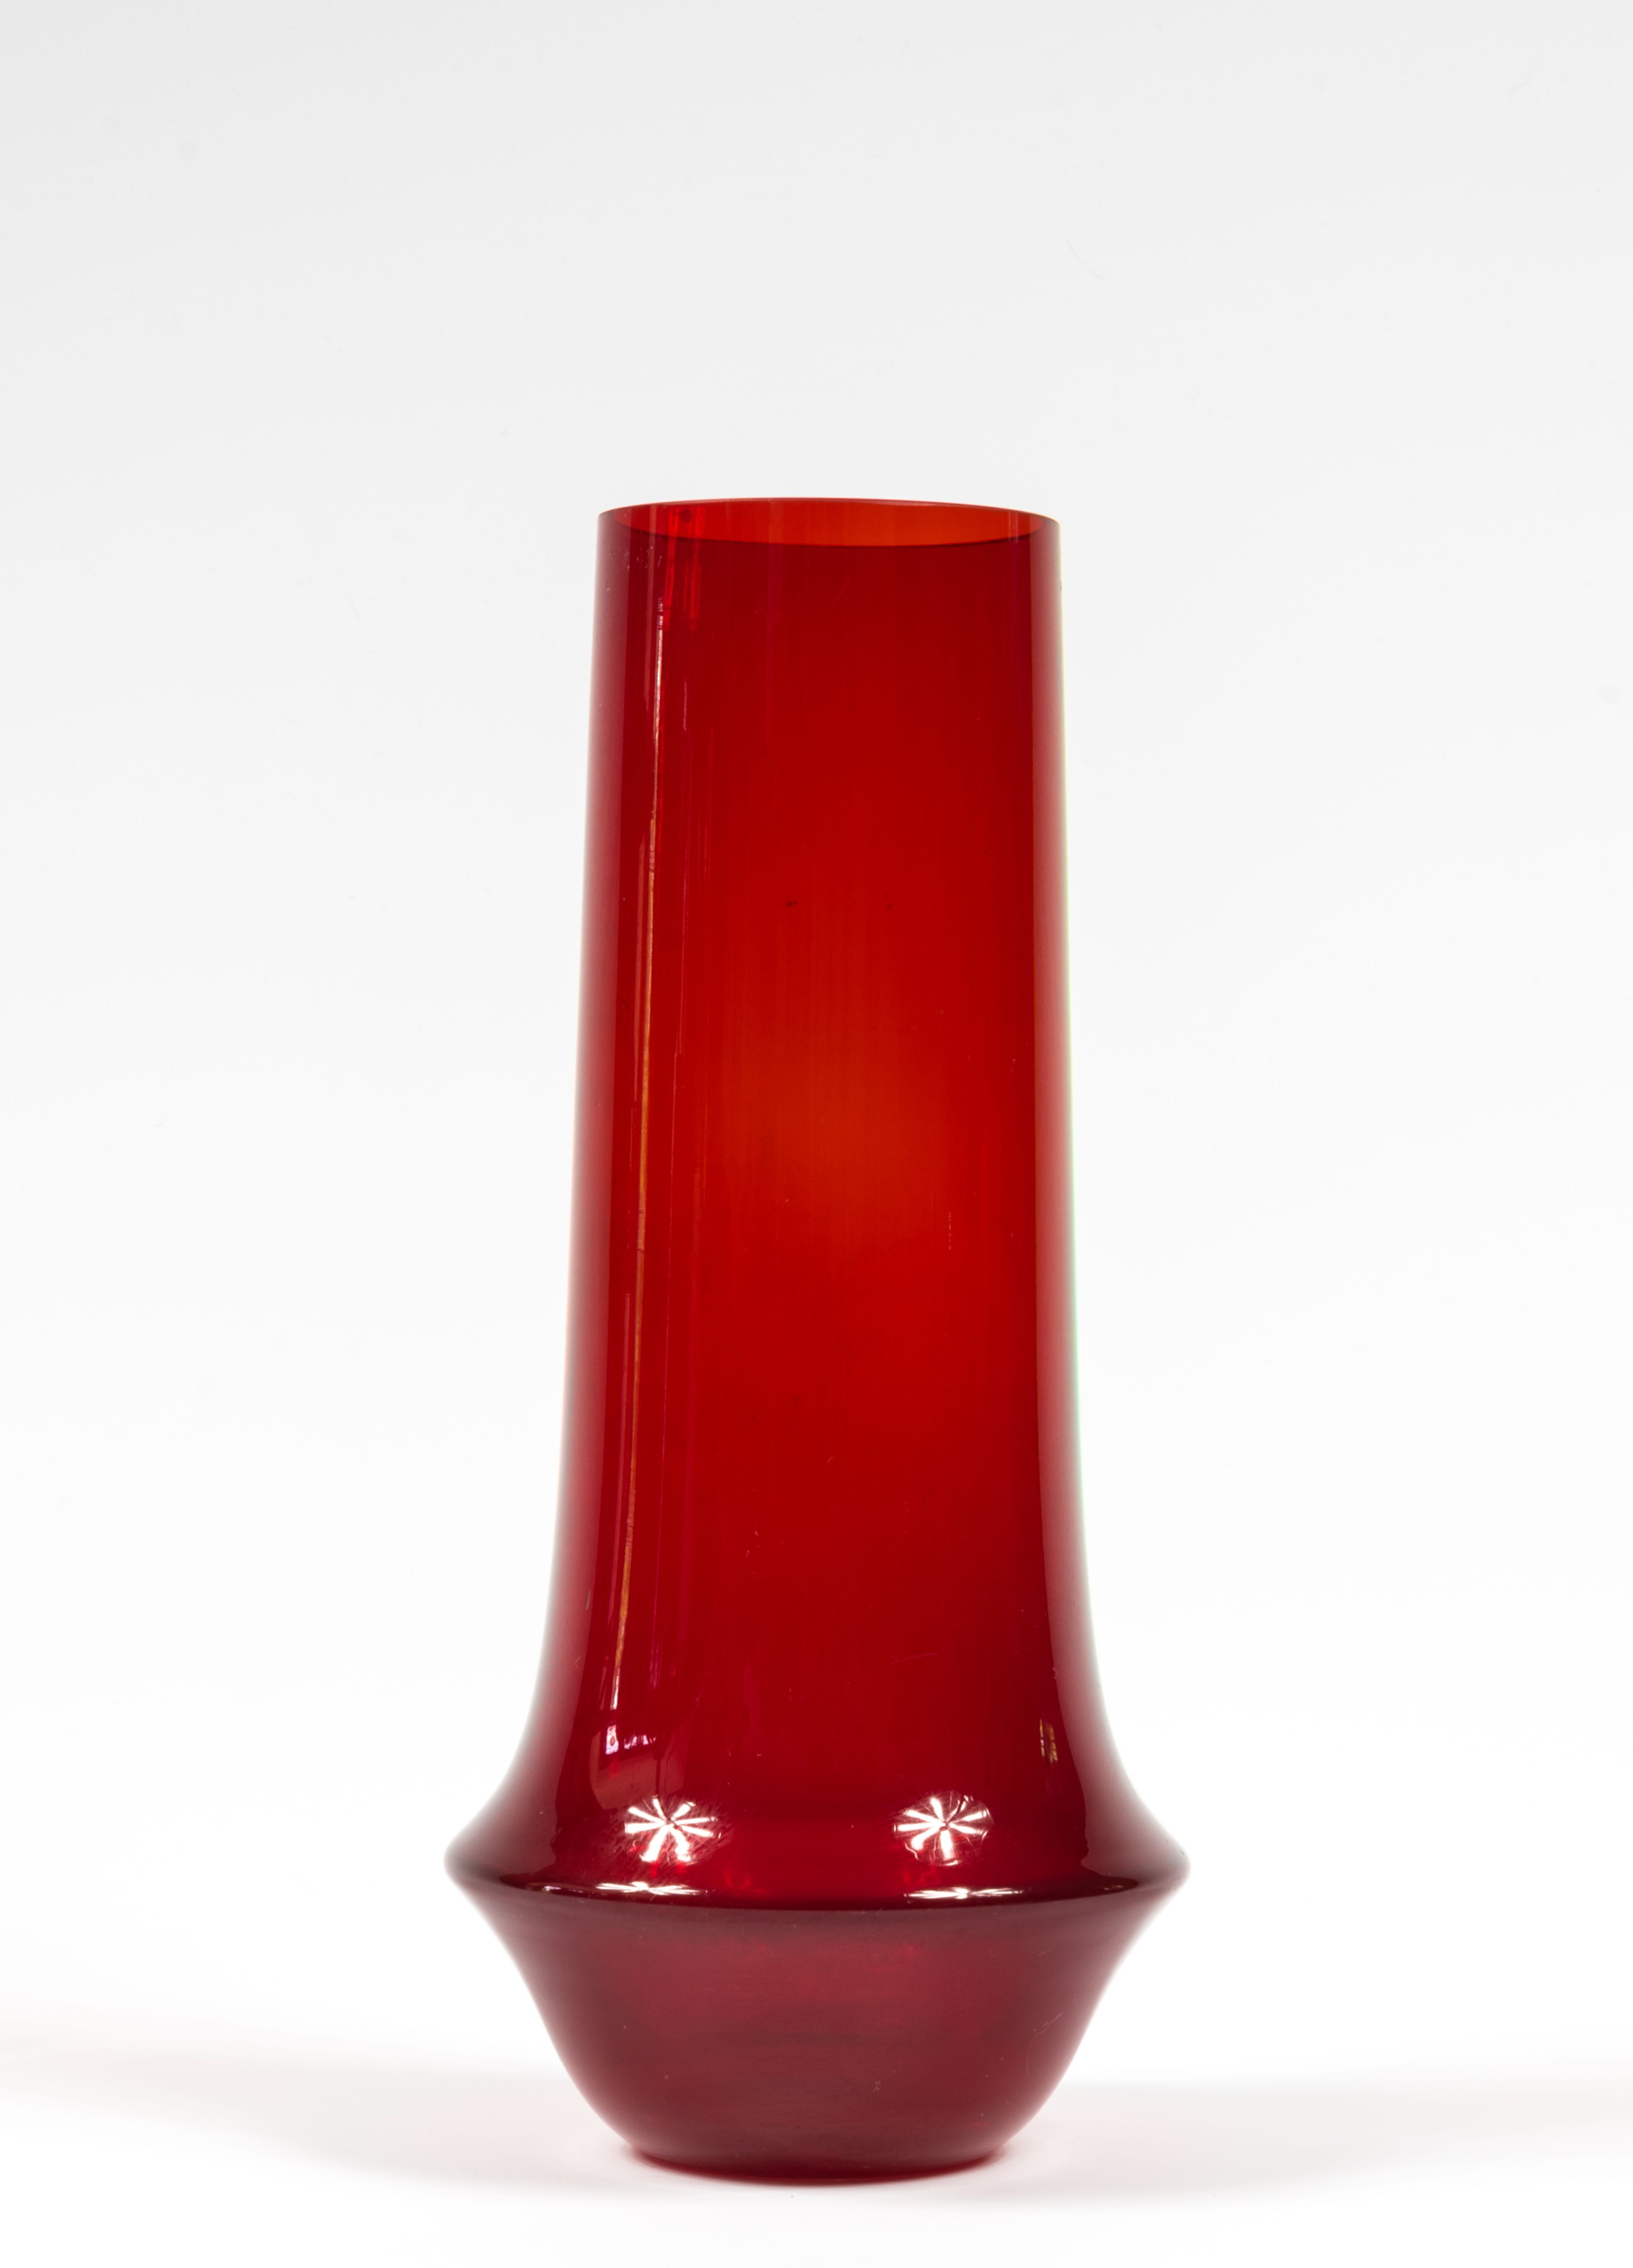 large round clear glass vase of riihima¤en lasi oy riihimaki red glass vase by tamara aladin with regard to large scandinavian red glass vase designed by tamara aladin c1963 for riihimaki riihimaen lasi oy